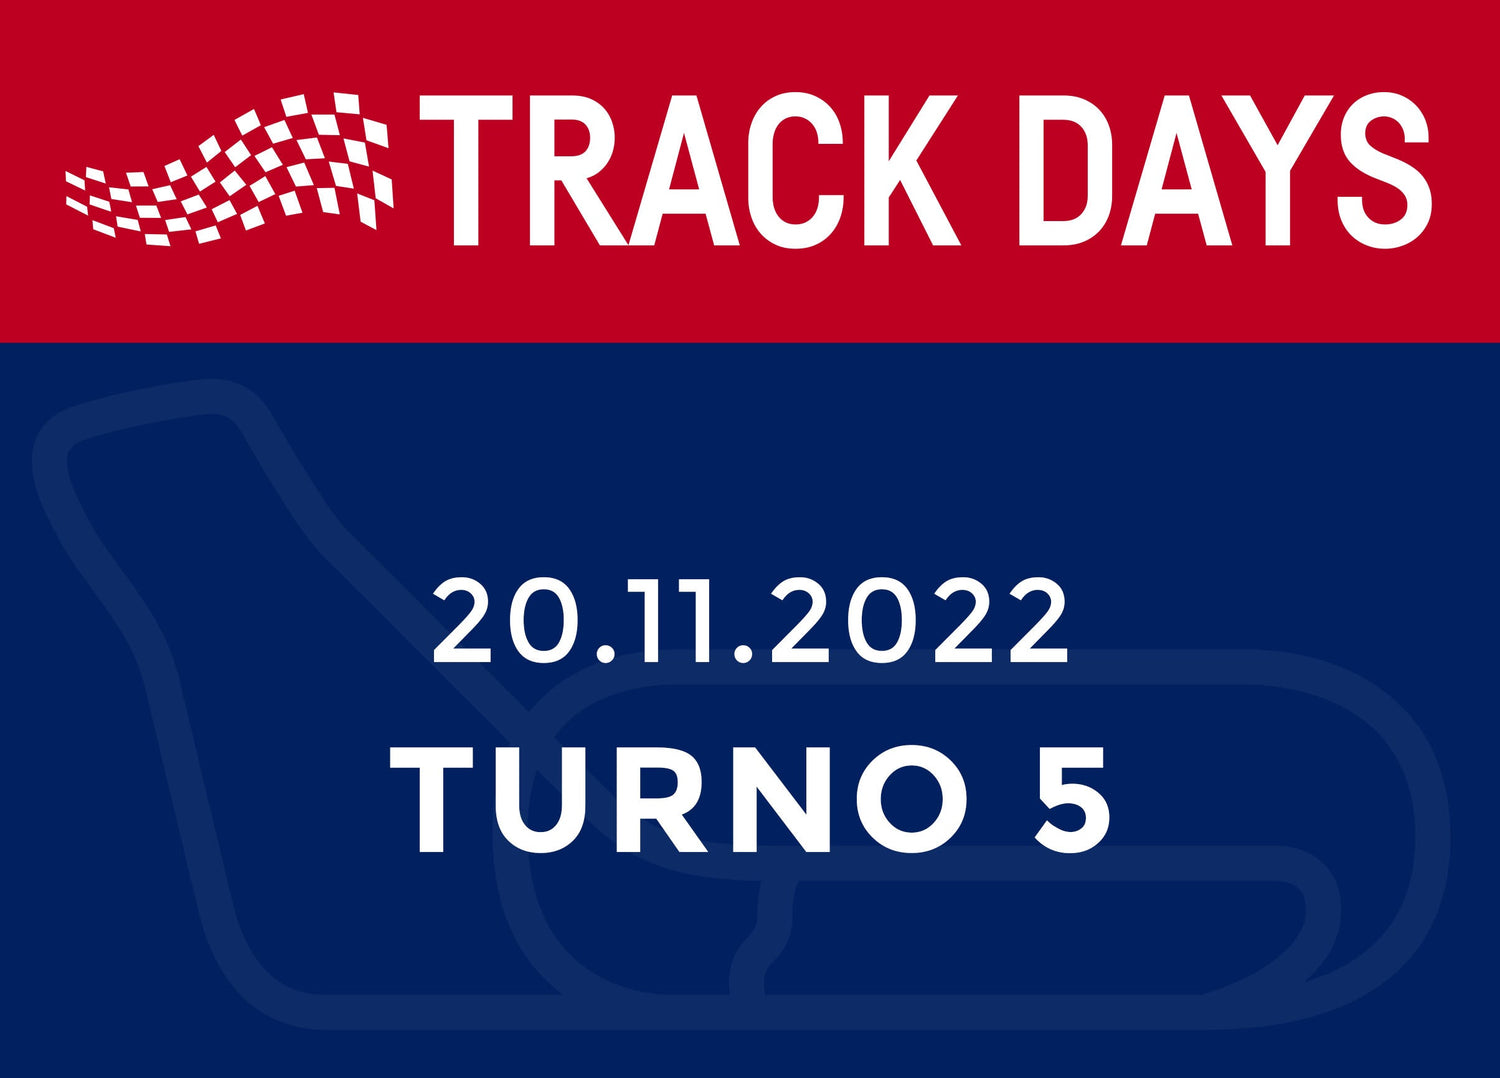 TRACK DAYS 20.11.22 TURNO 5